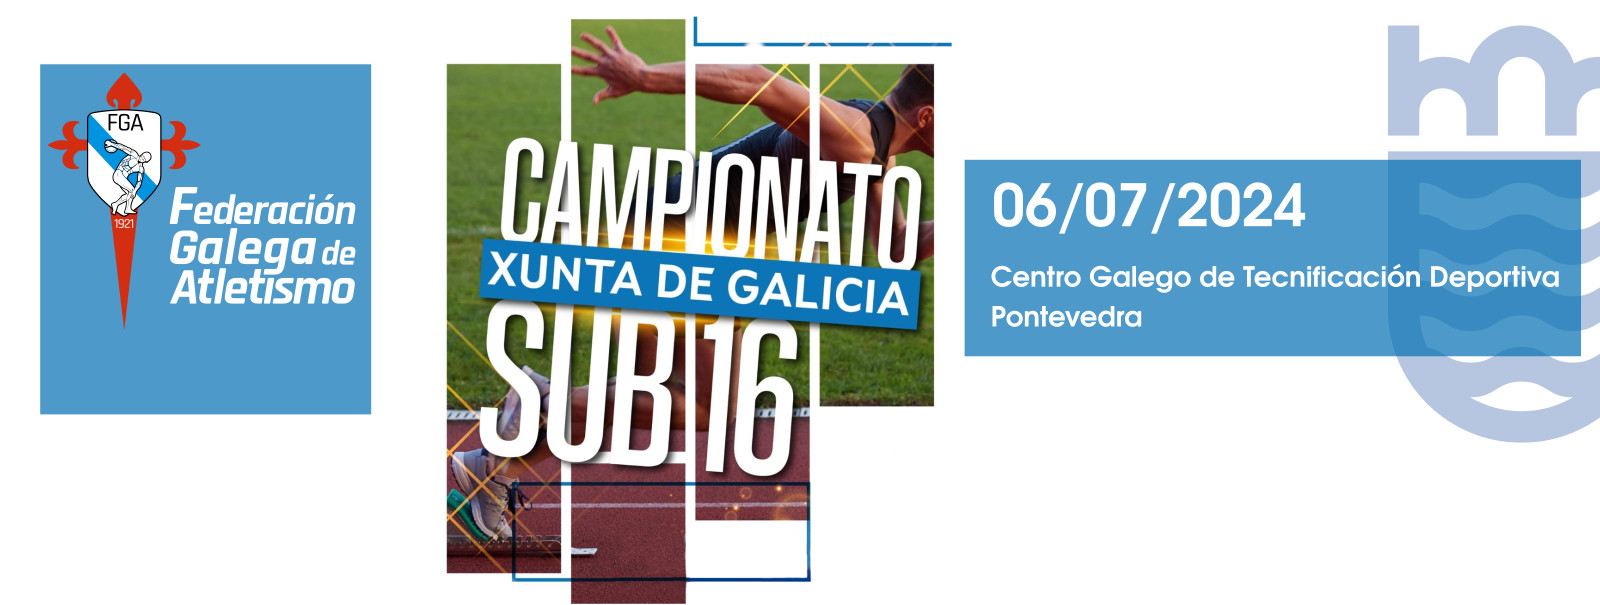  Campionato Xunta de Galicia sub-16.  Centro Galego de Tecnificación Deportiva, 6 xullo 2024